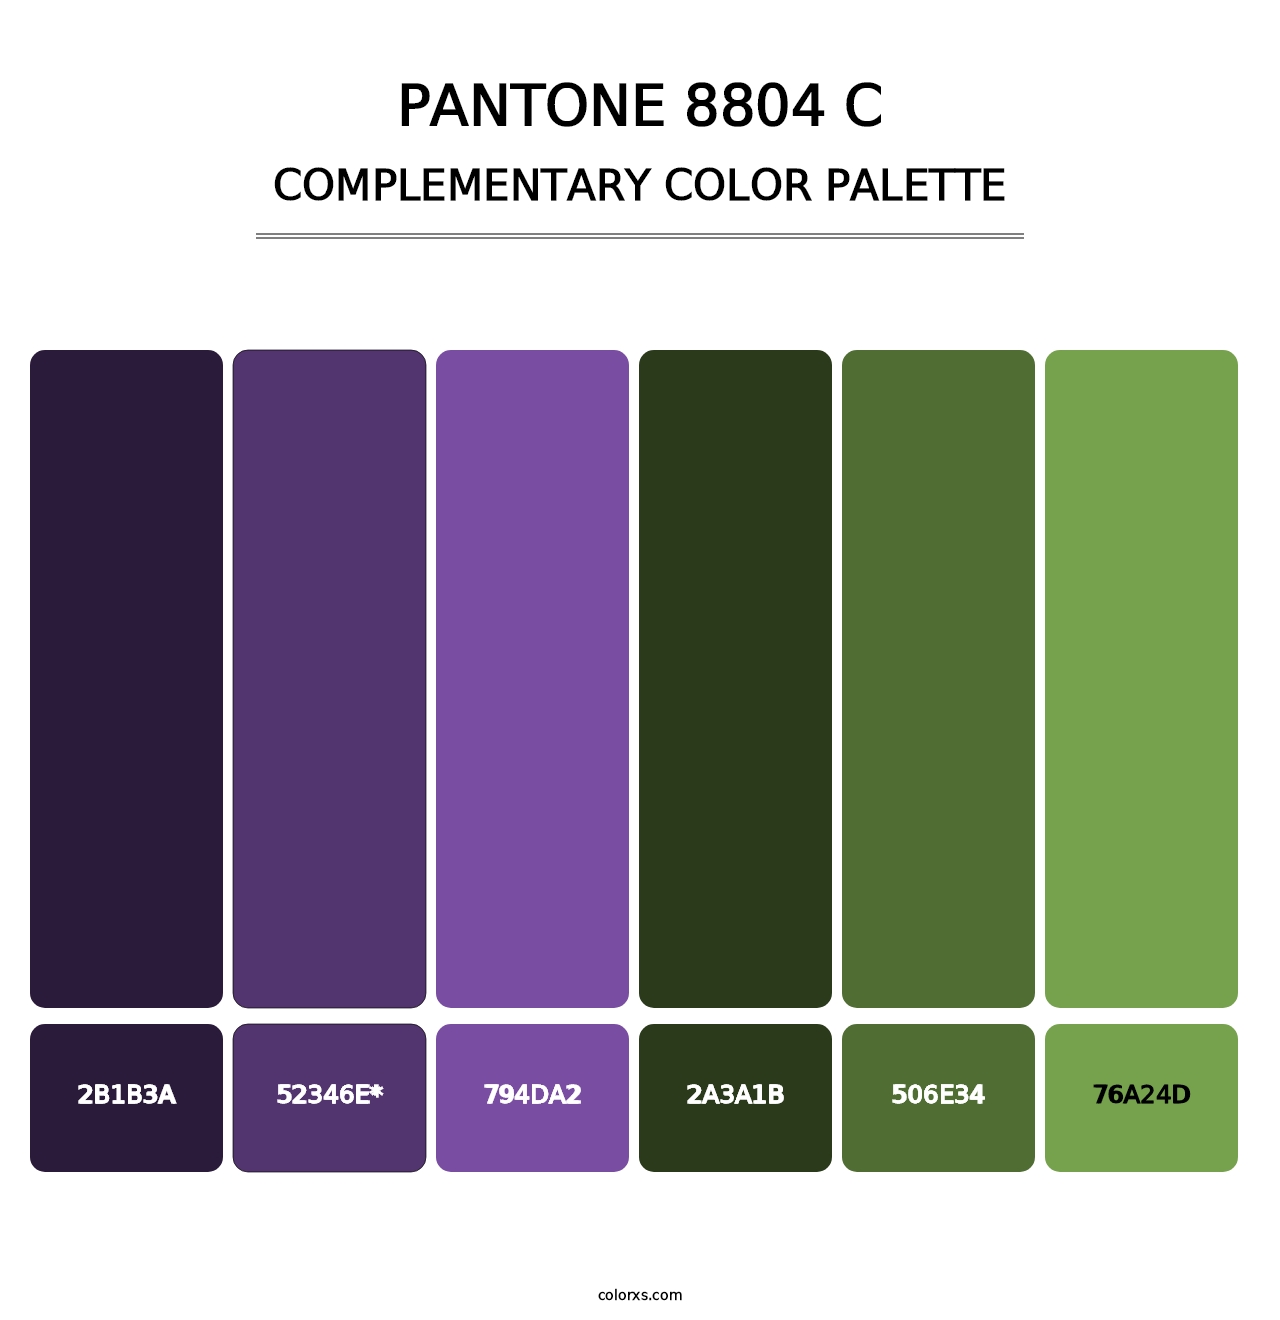 PANTONE 8804 C - Complementary Color Palette